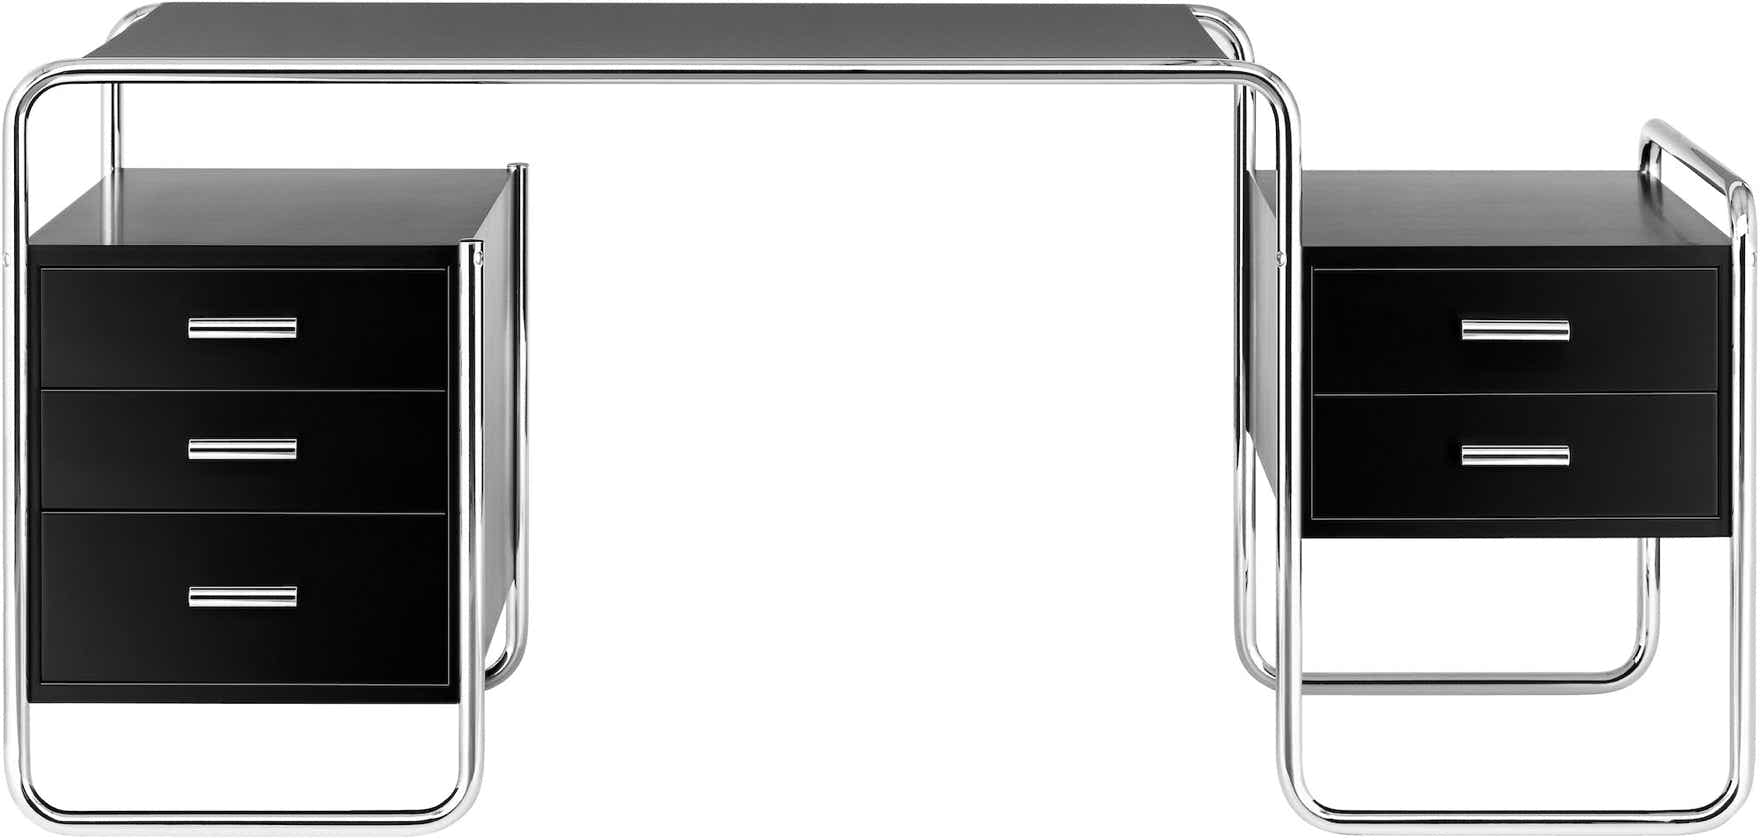 S285 Desk – 1 Large cabinet + 1 Small cabinet – Black ash / Chrome